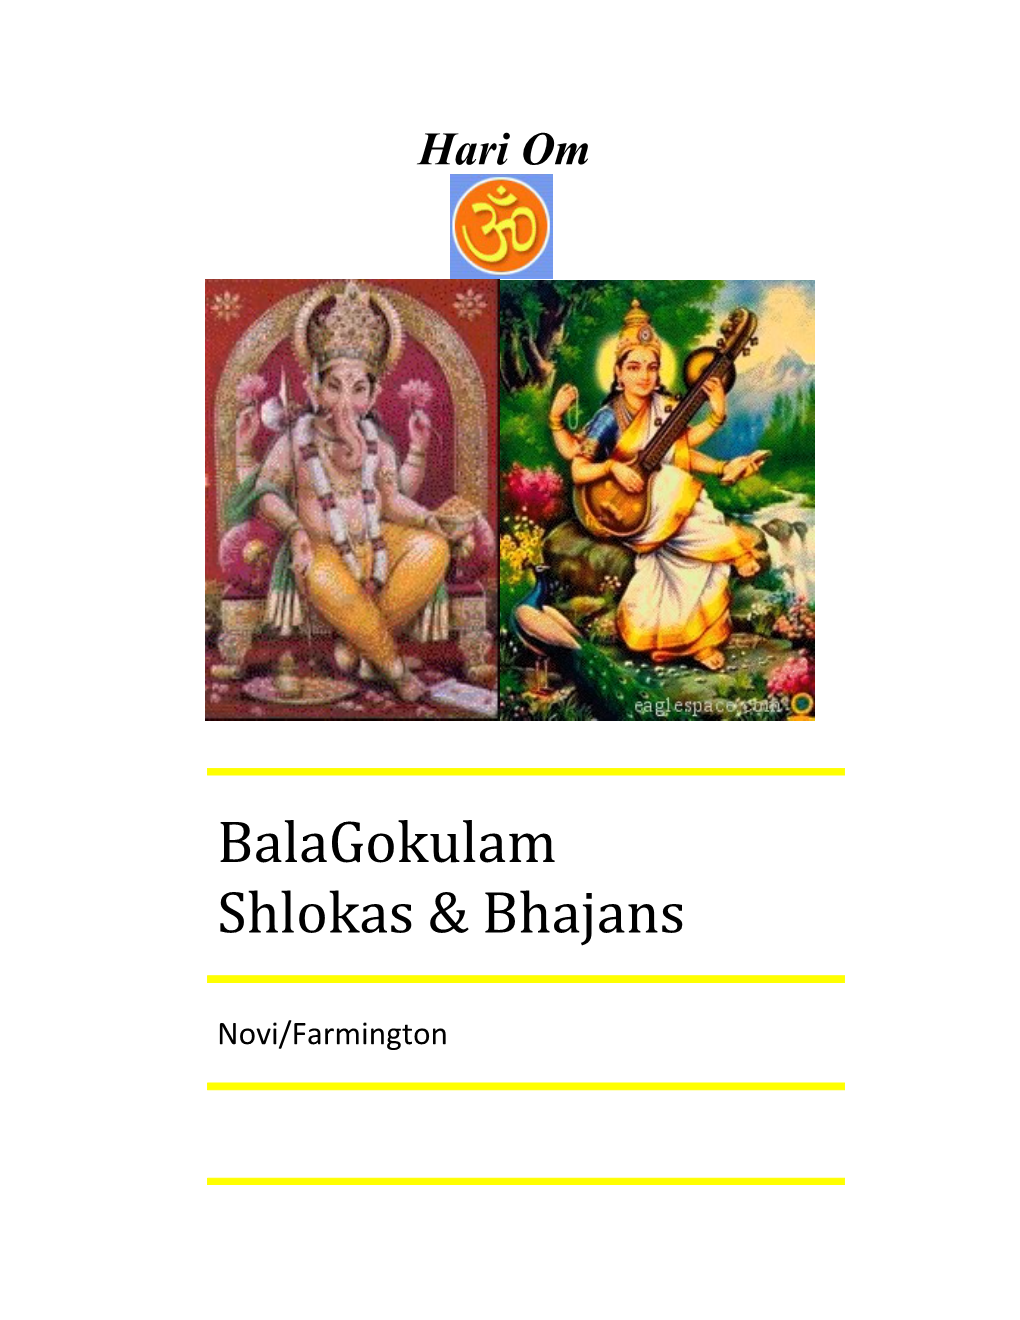 Balagokulam Shlokas & Bhajans